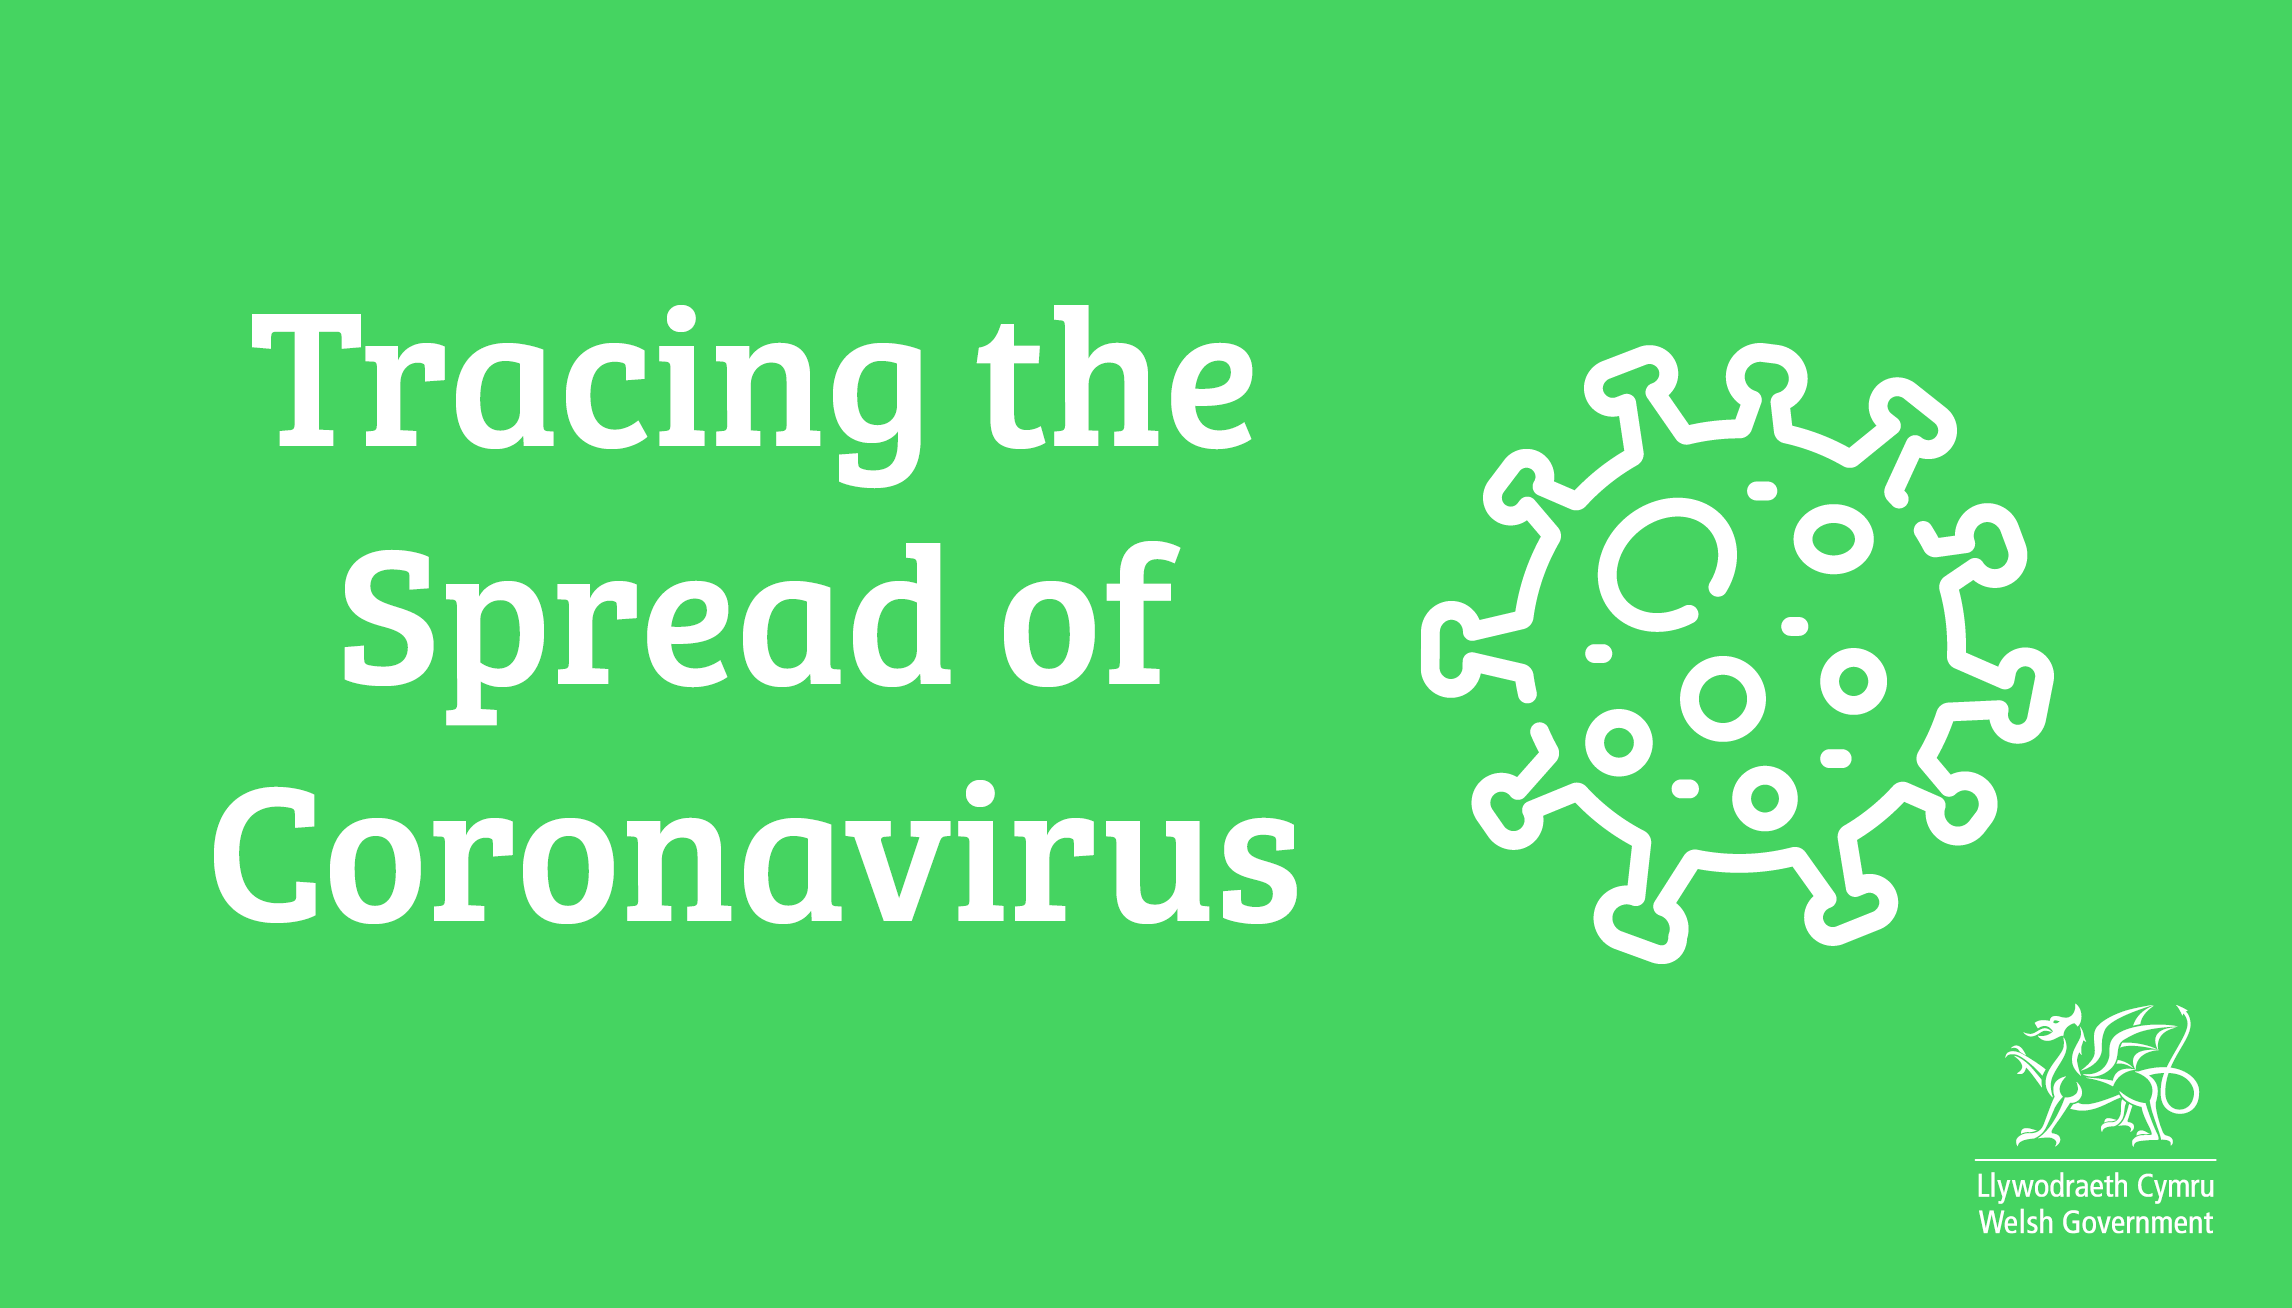 Tracing the spread of Coronavirus